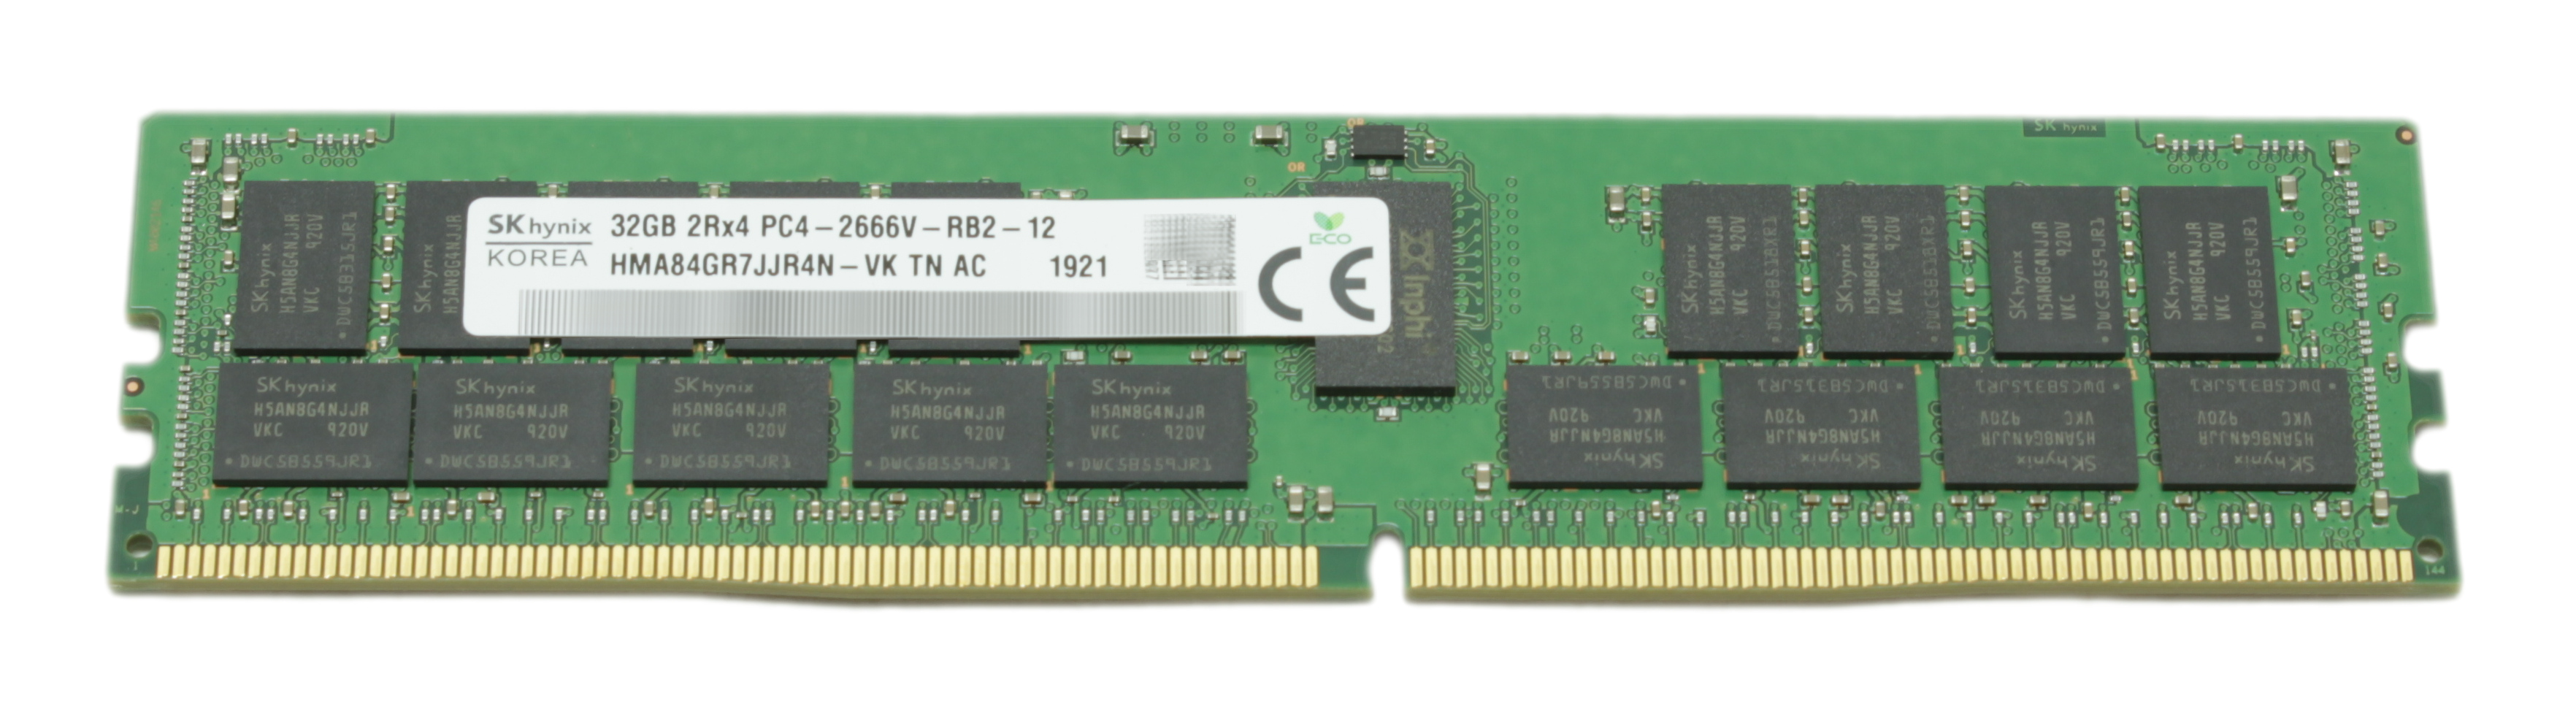 Hynix 32Gb Server Memory PC4-2666V DDR4 21300 1.2V 288pin HMA84GR7JJR4N-VK